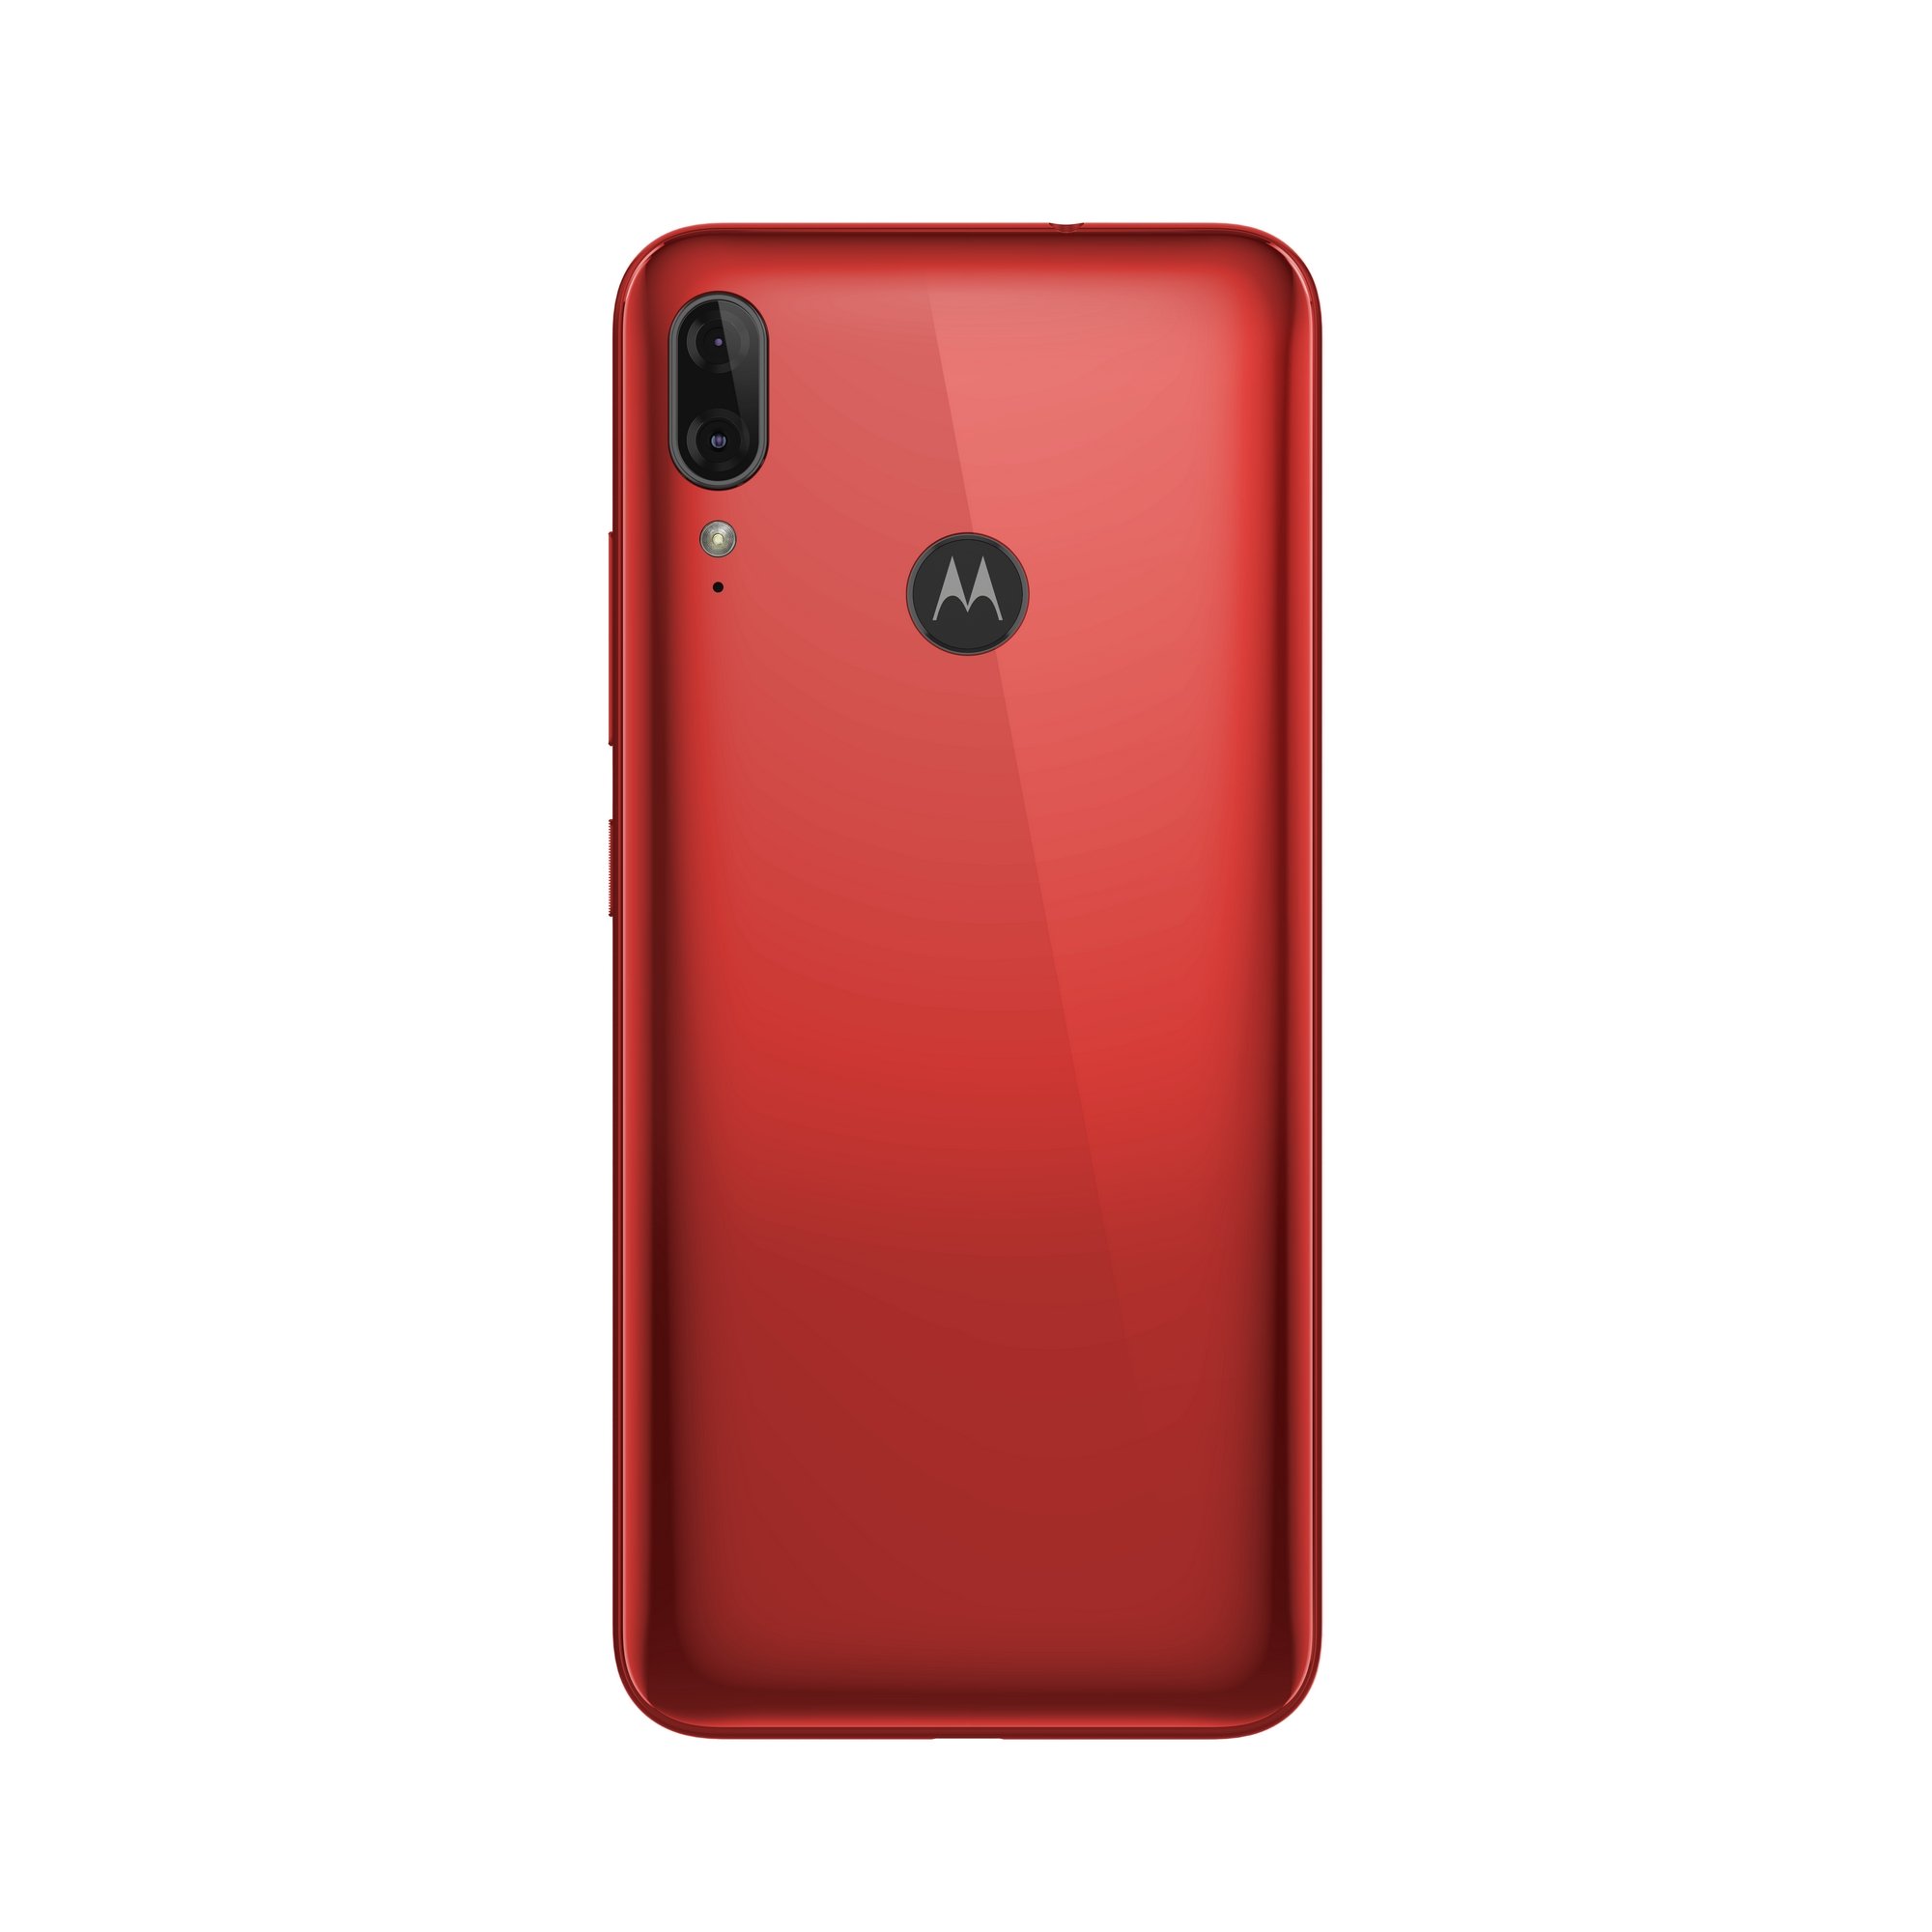 Motorola Moto E6 Plus review